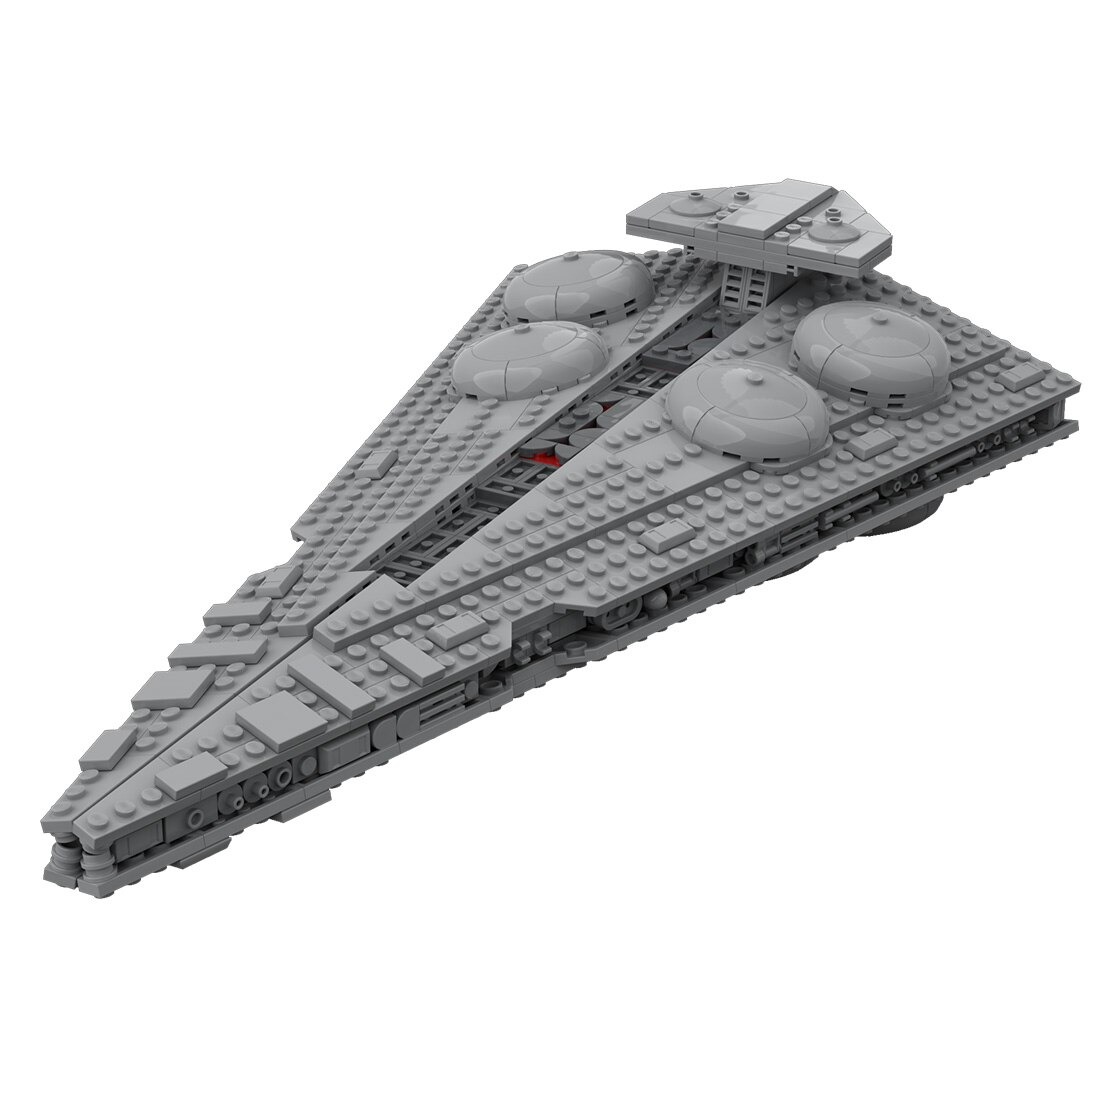 Interdictor Class Star Destroyer Moc 108178 6